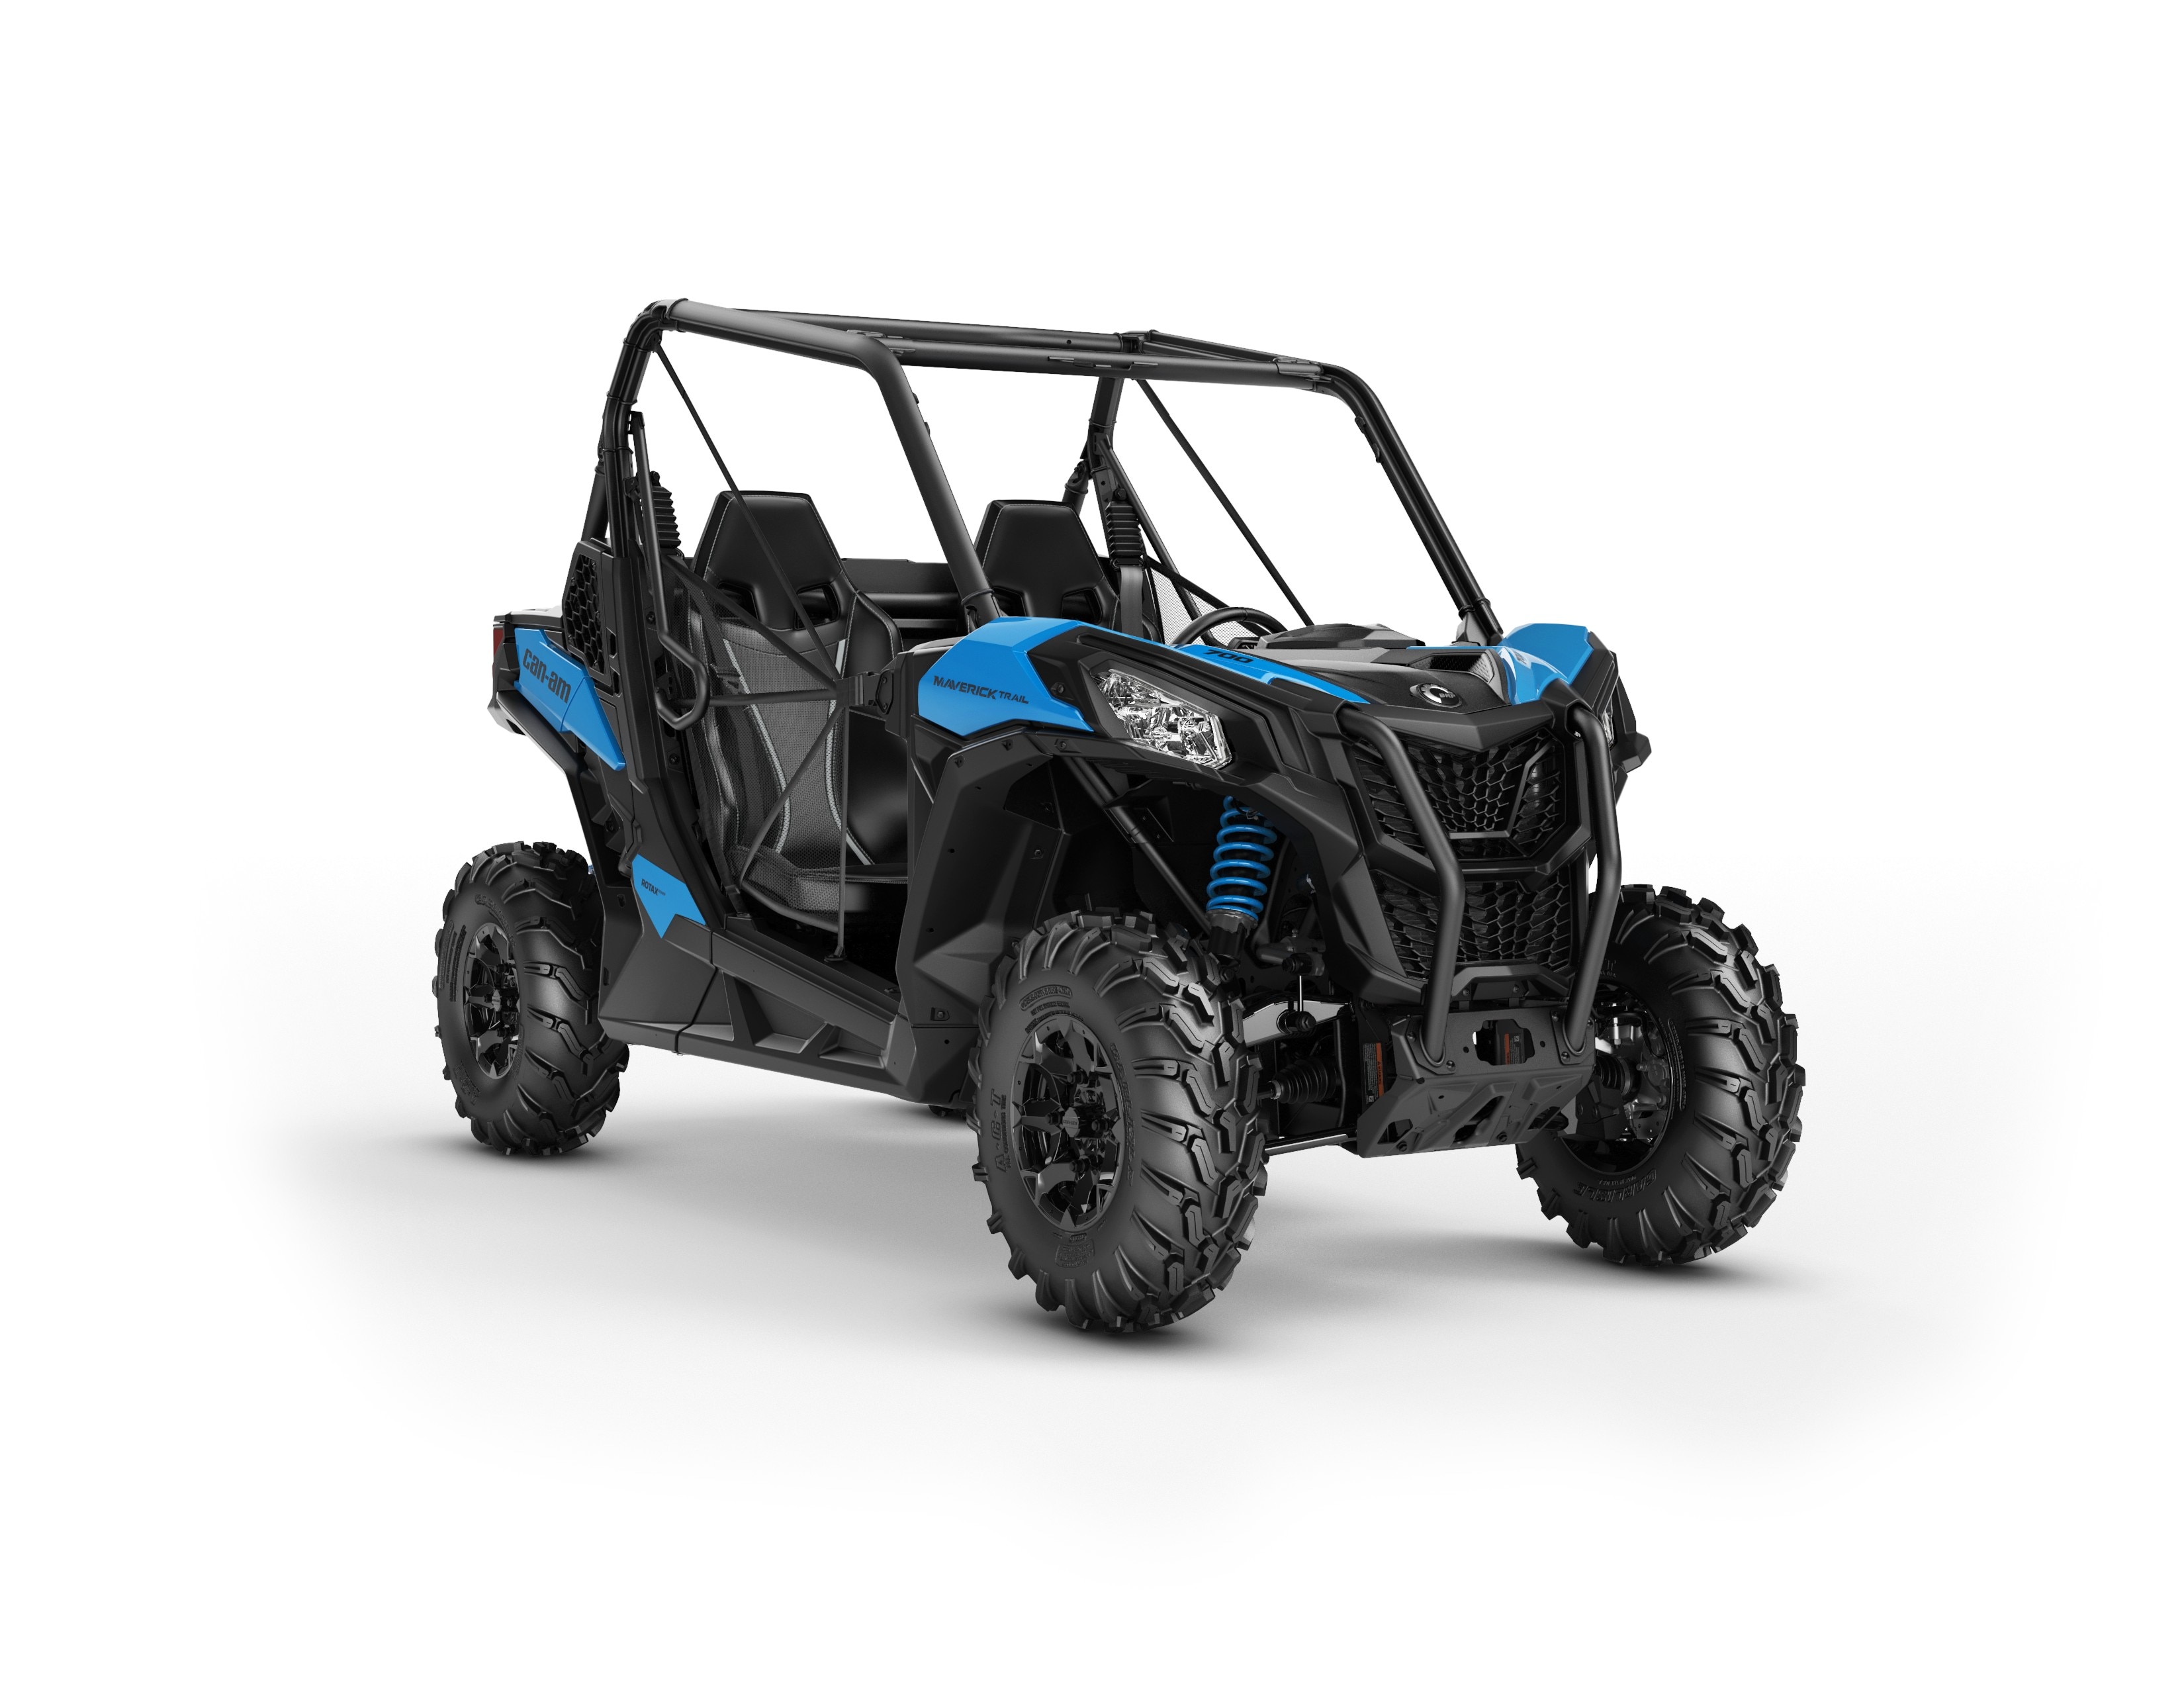 2022 CanAm Maverick Trail Adventure SideBySide Vehicles